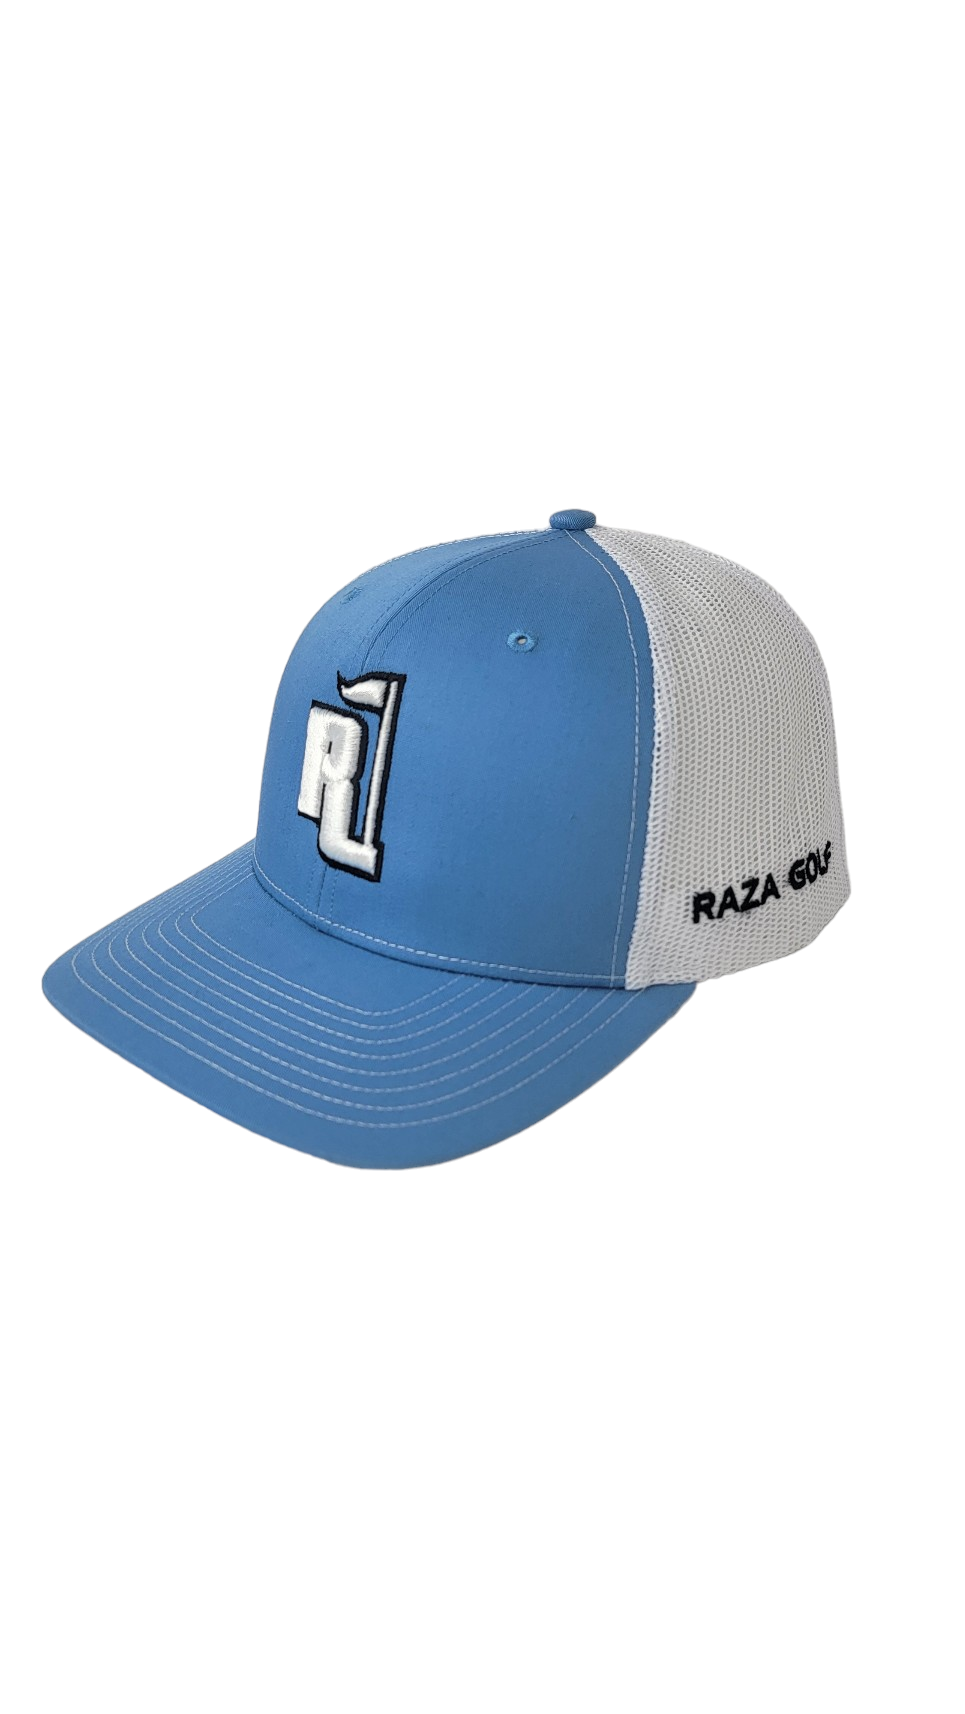 Raza Golf Baby Blue and White Trucker with White and Black Logo